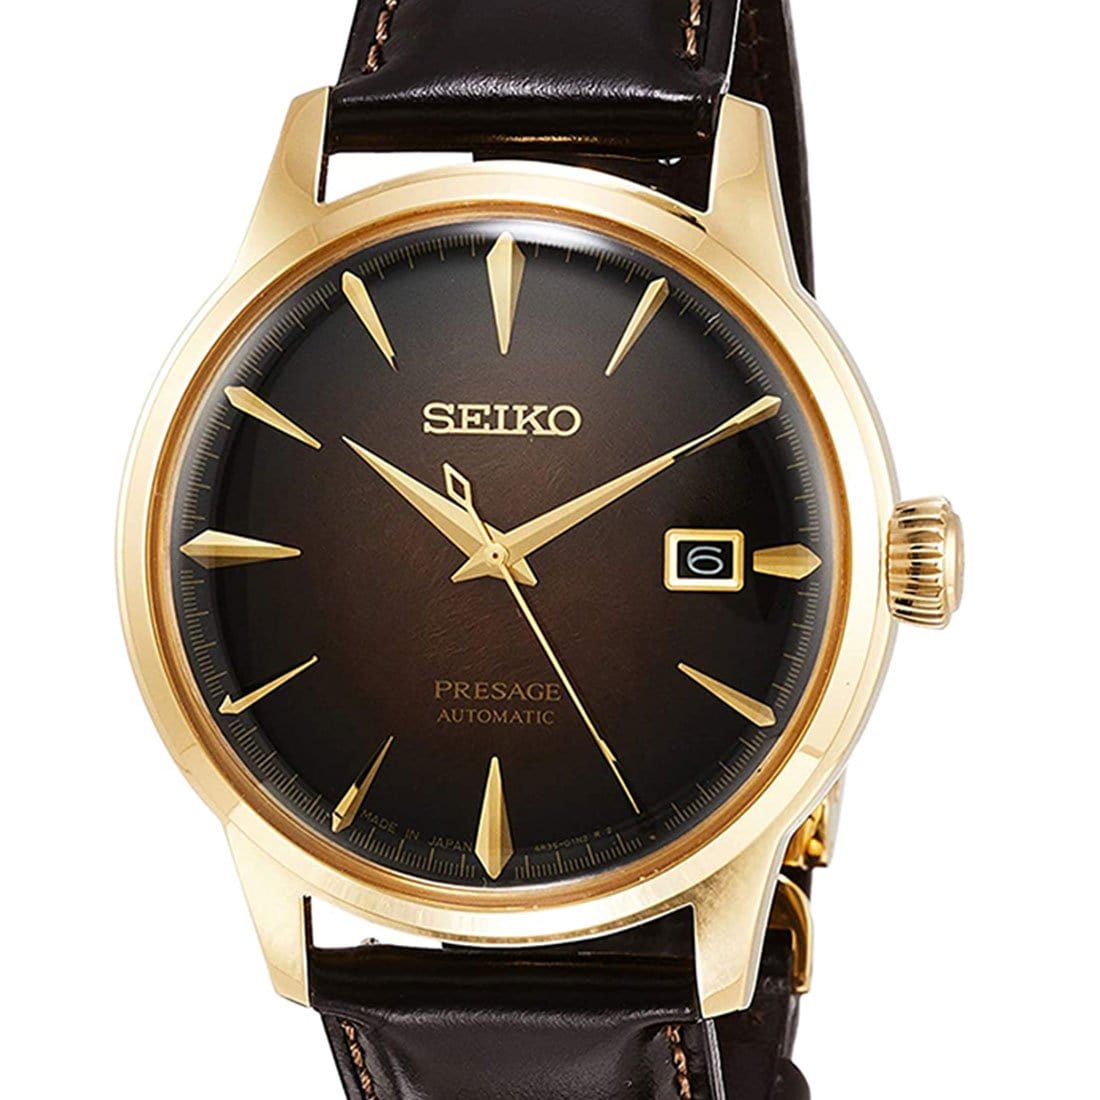 SRPD36J1 SRPD36J SRPD36 Seiko Presage Automatic Limited Edition Watch